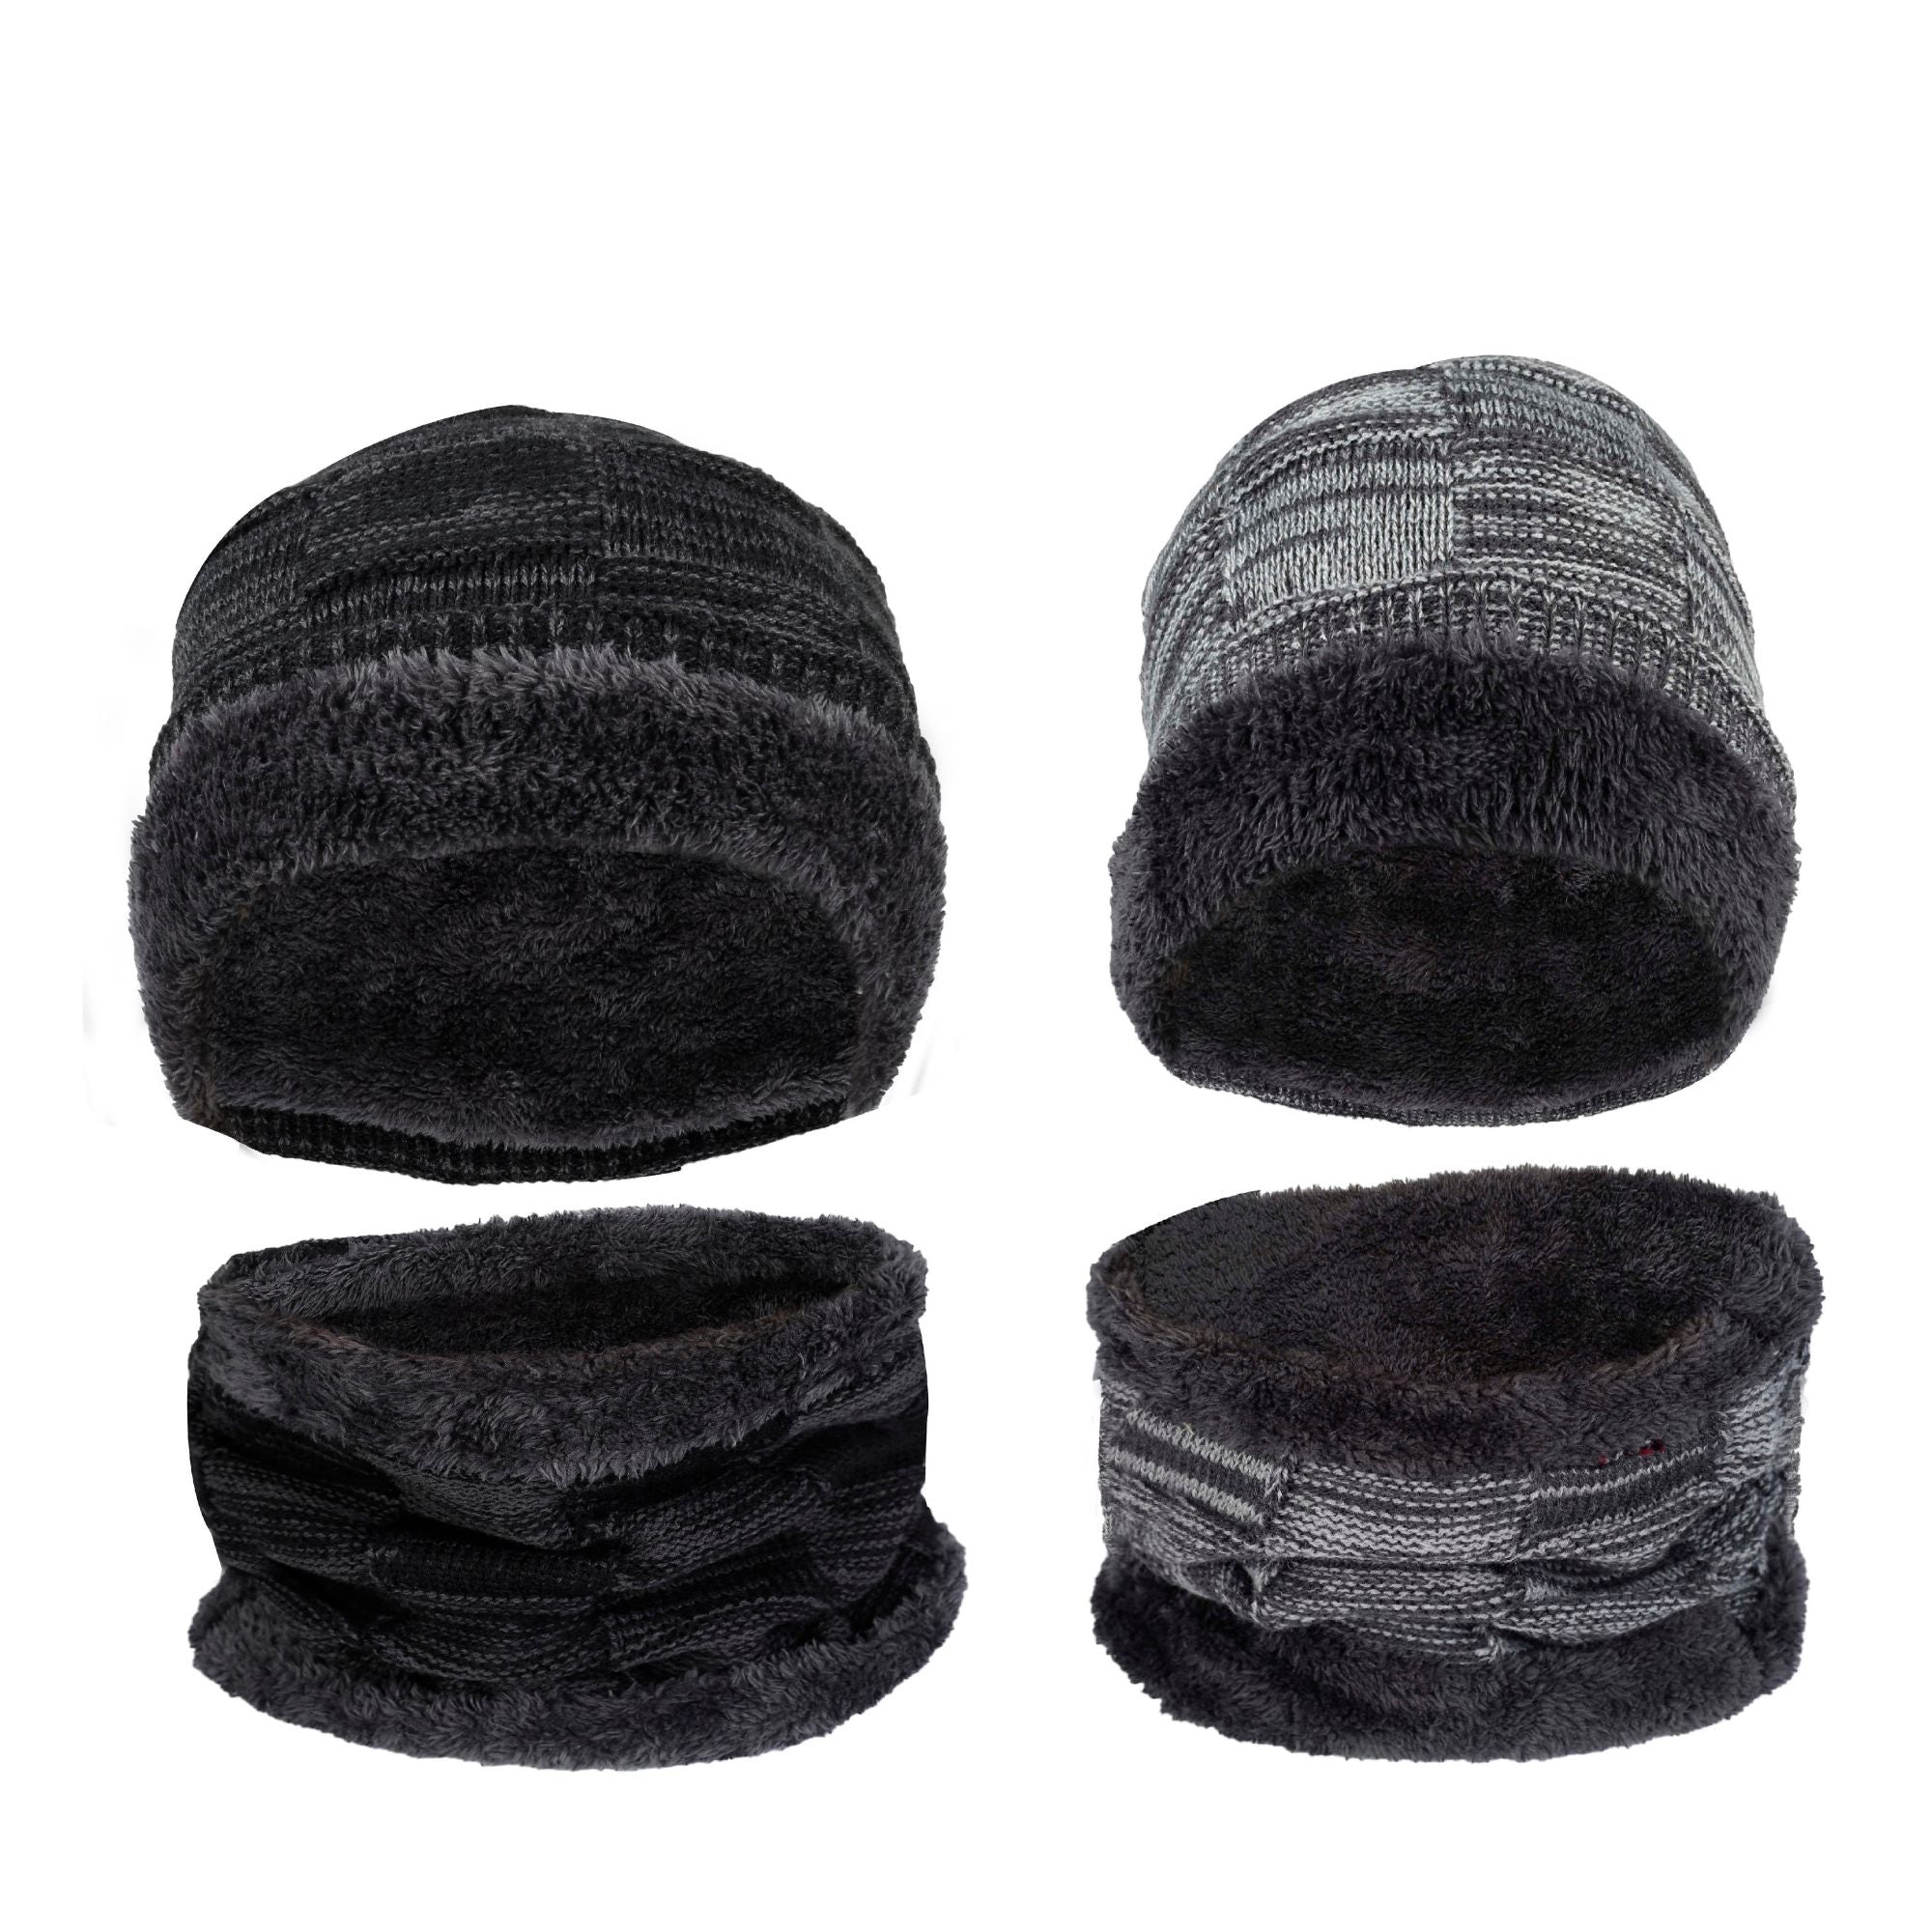 1876 Hat - Black & White Wool With Black Lining & Fuzzy Brim